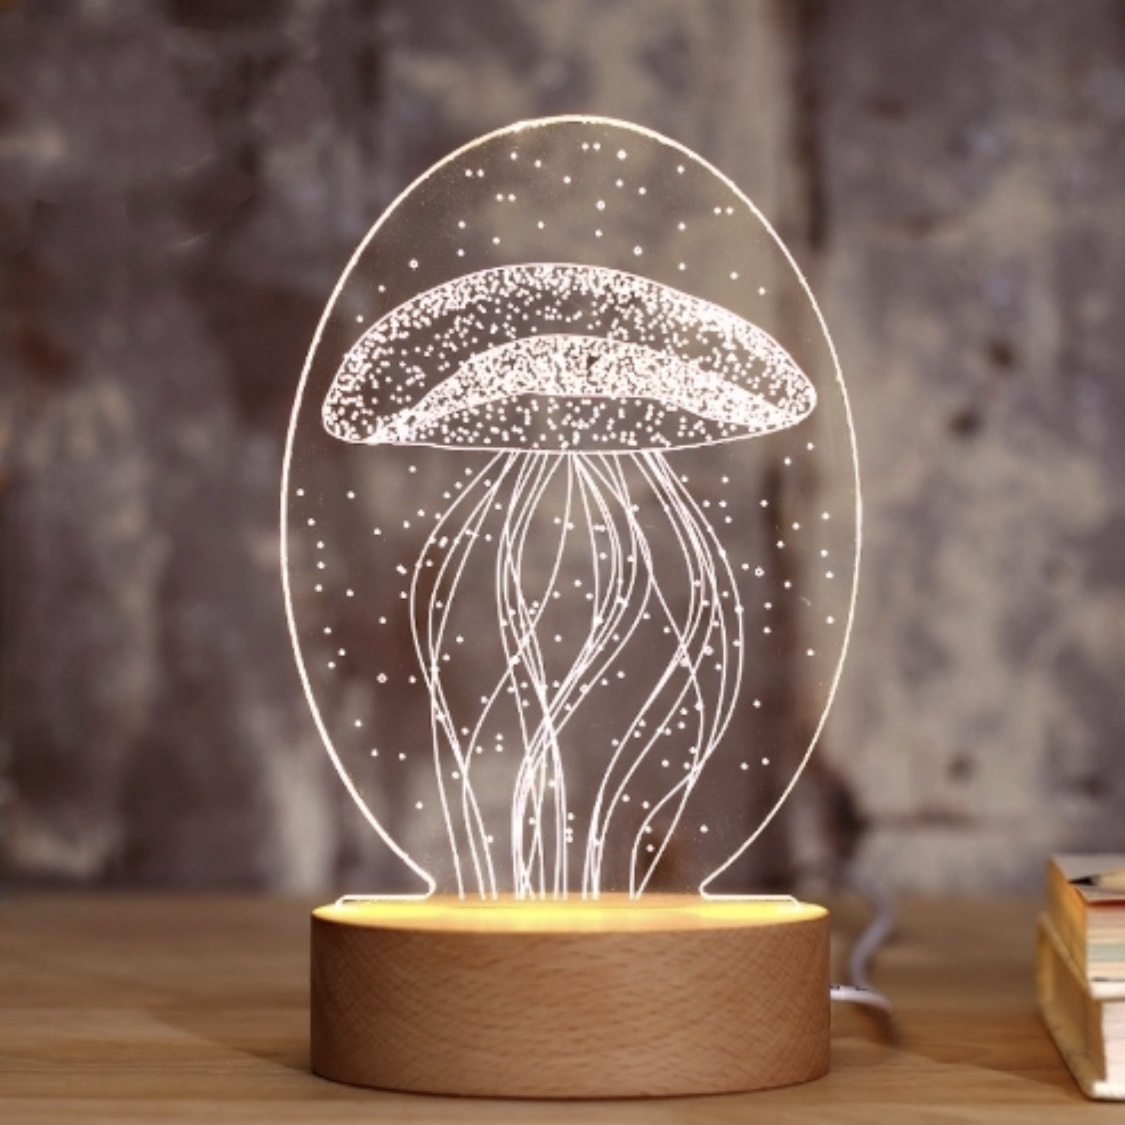 LED 3D Lamp / USB Wood Base Bedroom Night light / Creative Gifts